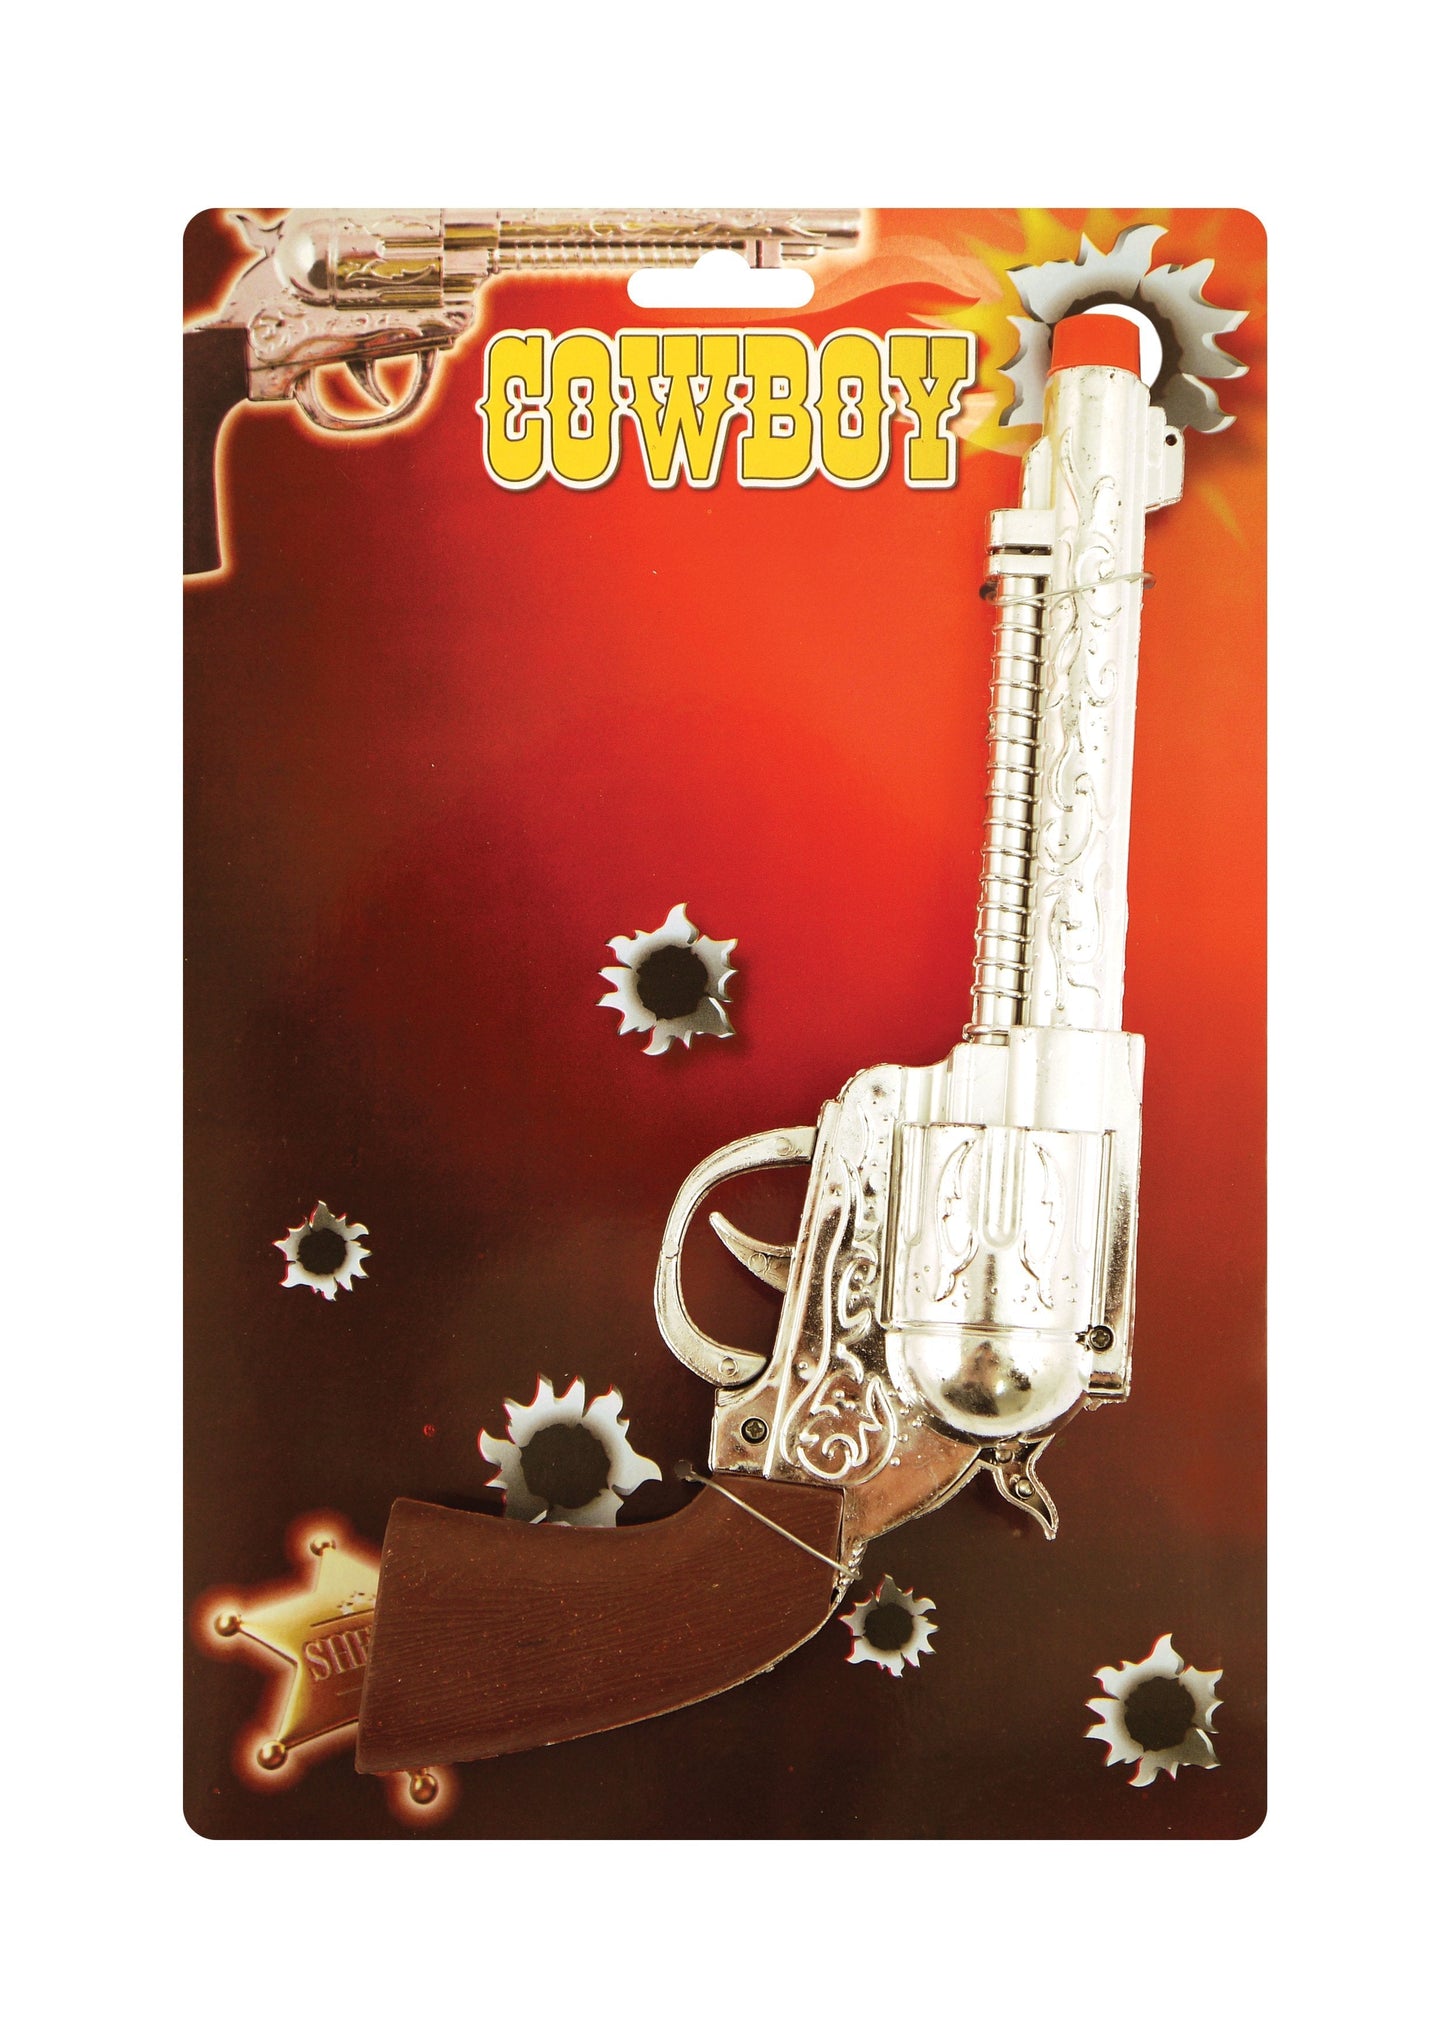 Children's Toy Cowboy Gun Pistol 24 cm B52299 (Parcel Rate)